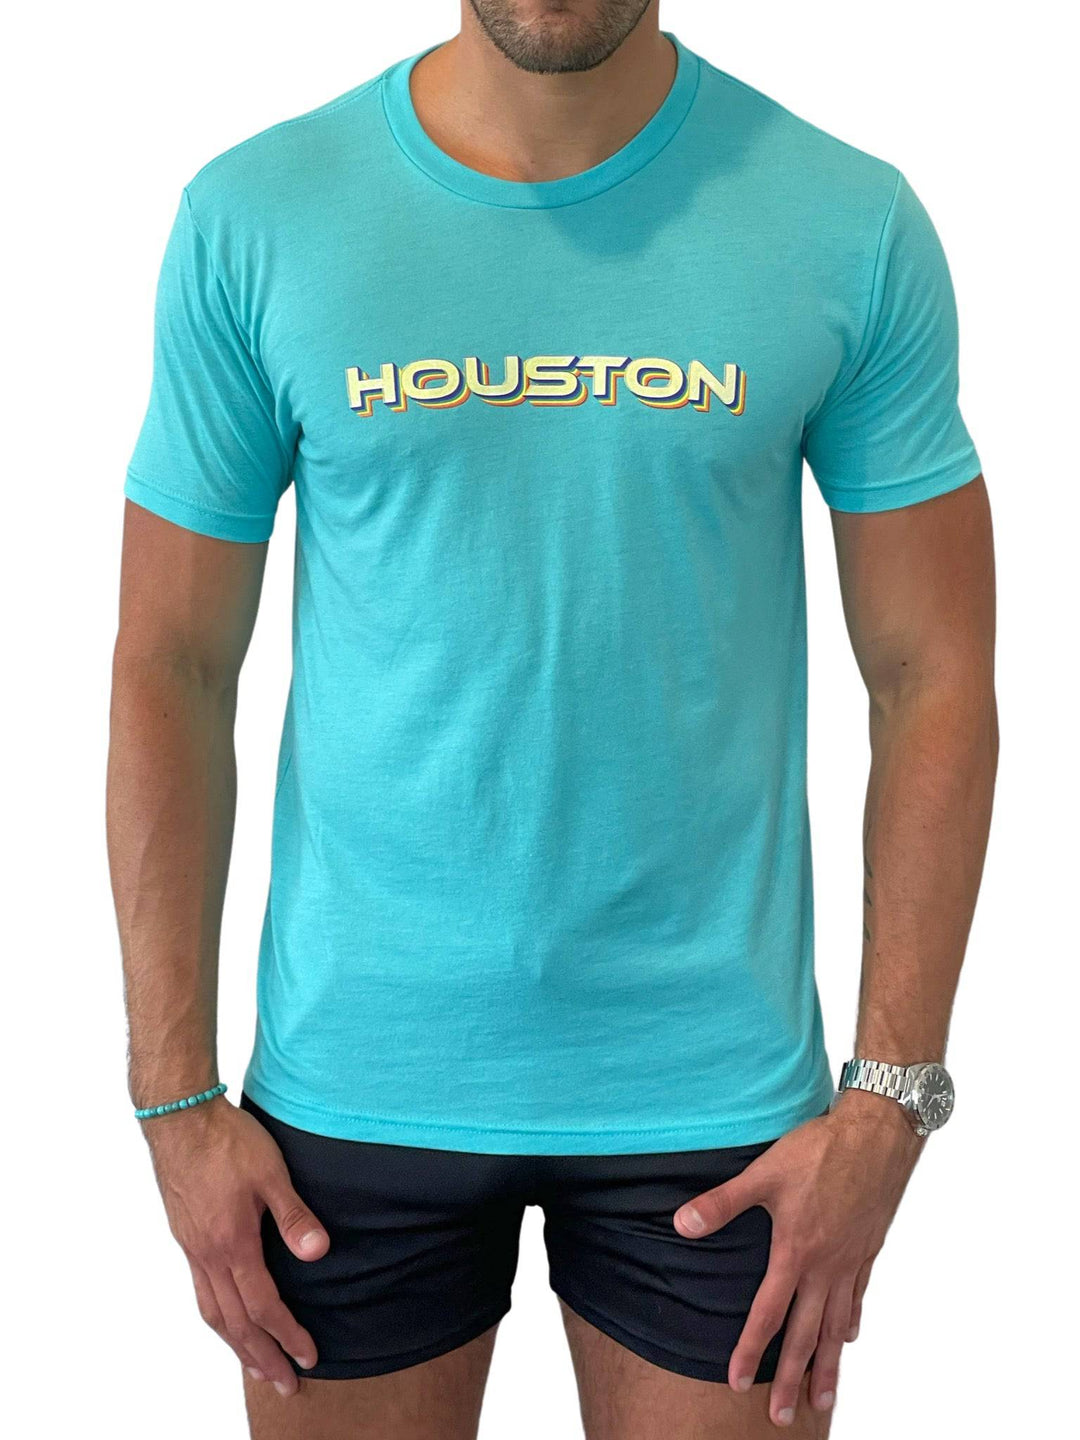 Houston's Cool Houston Blue T-Shirt The Gay Fan Club